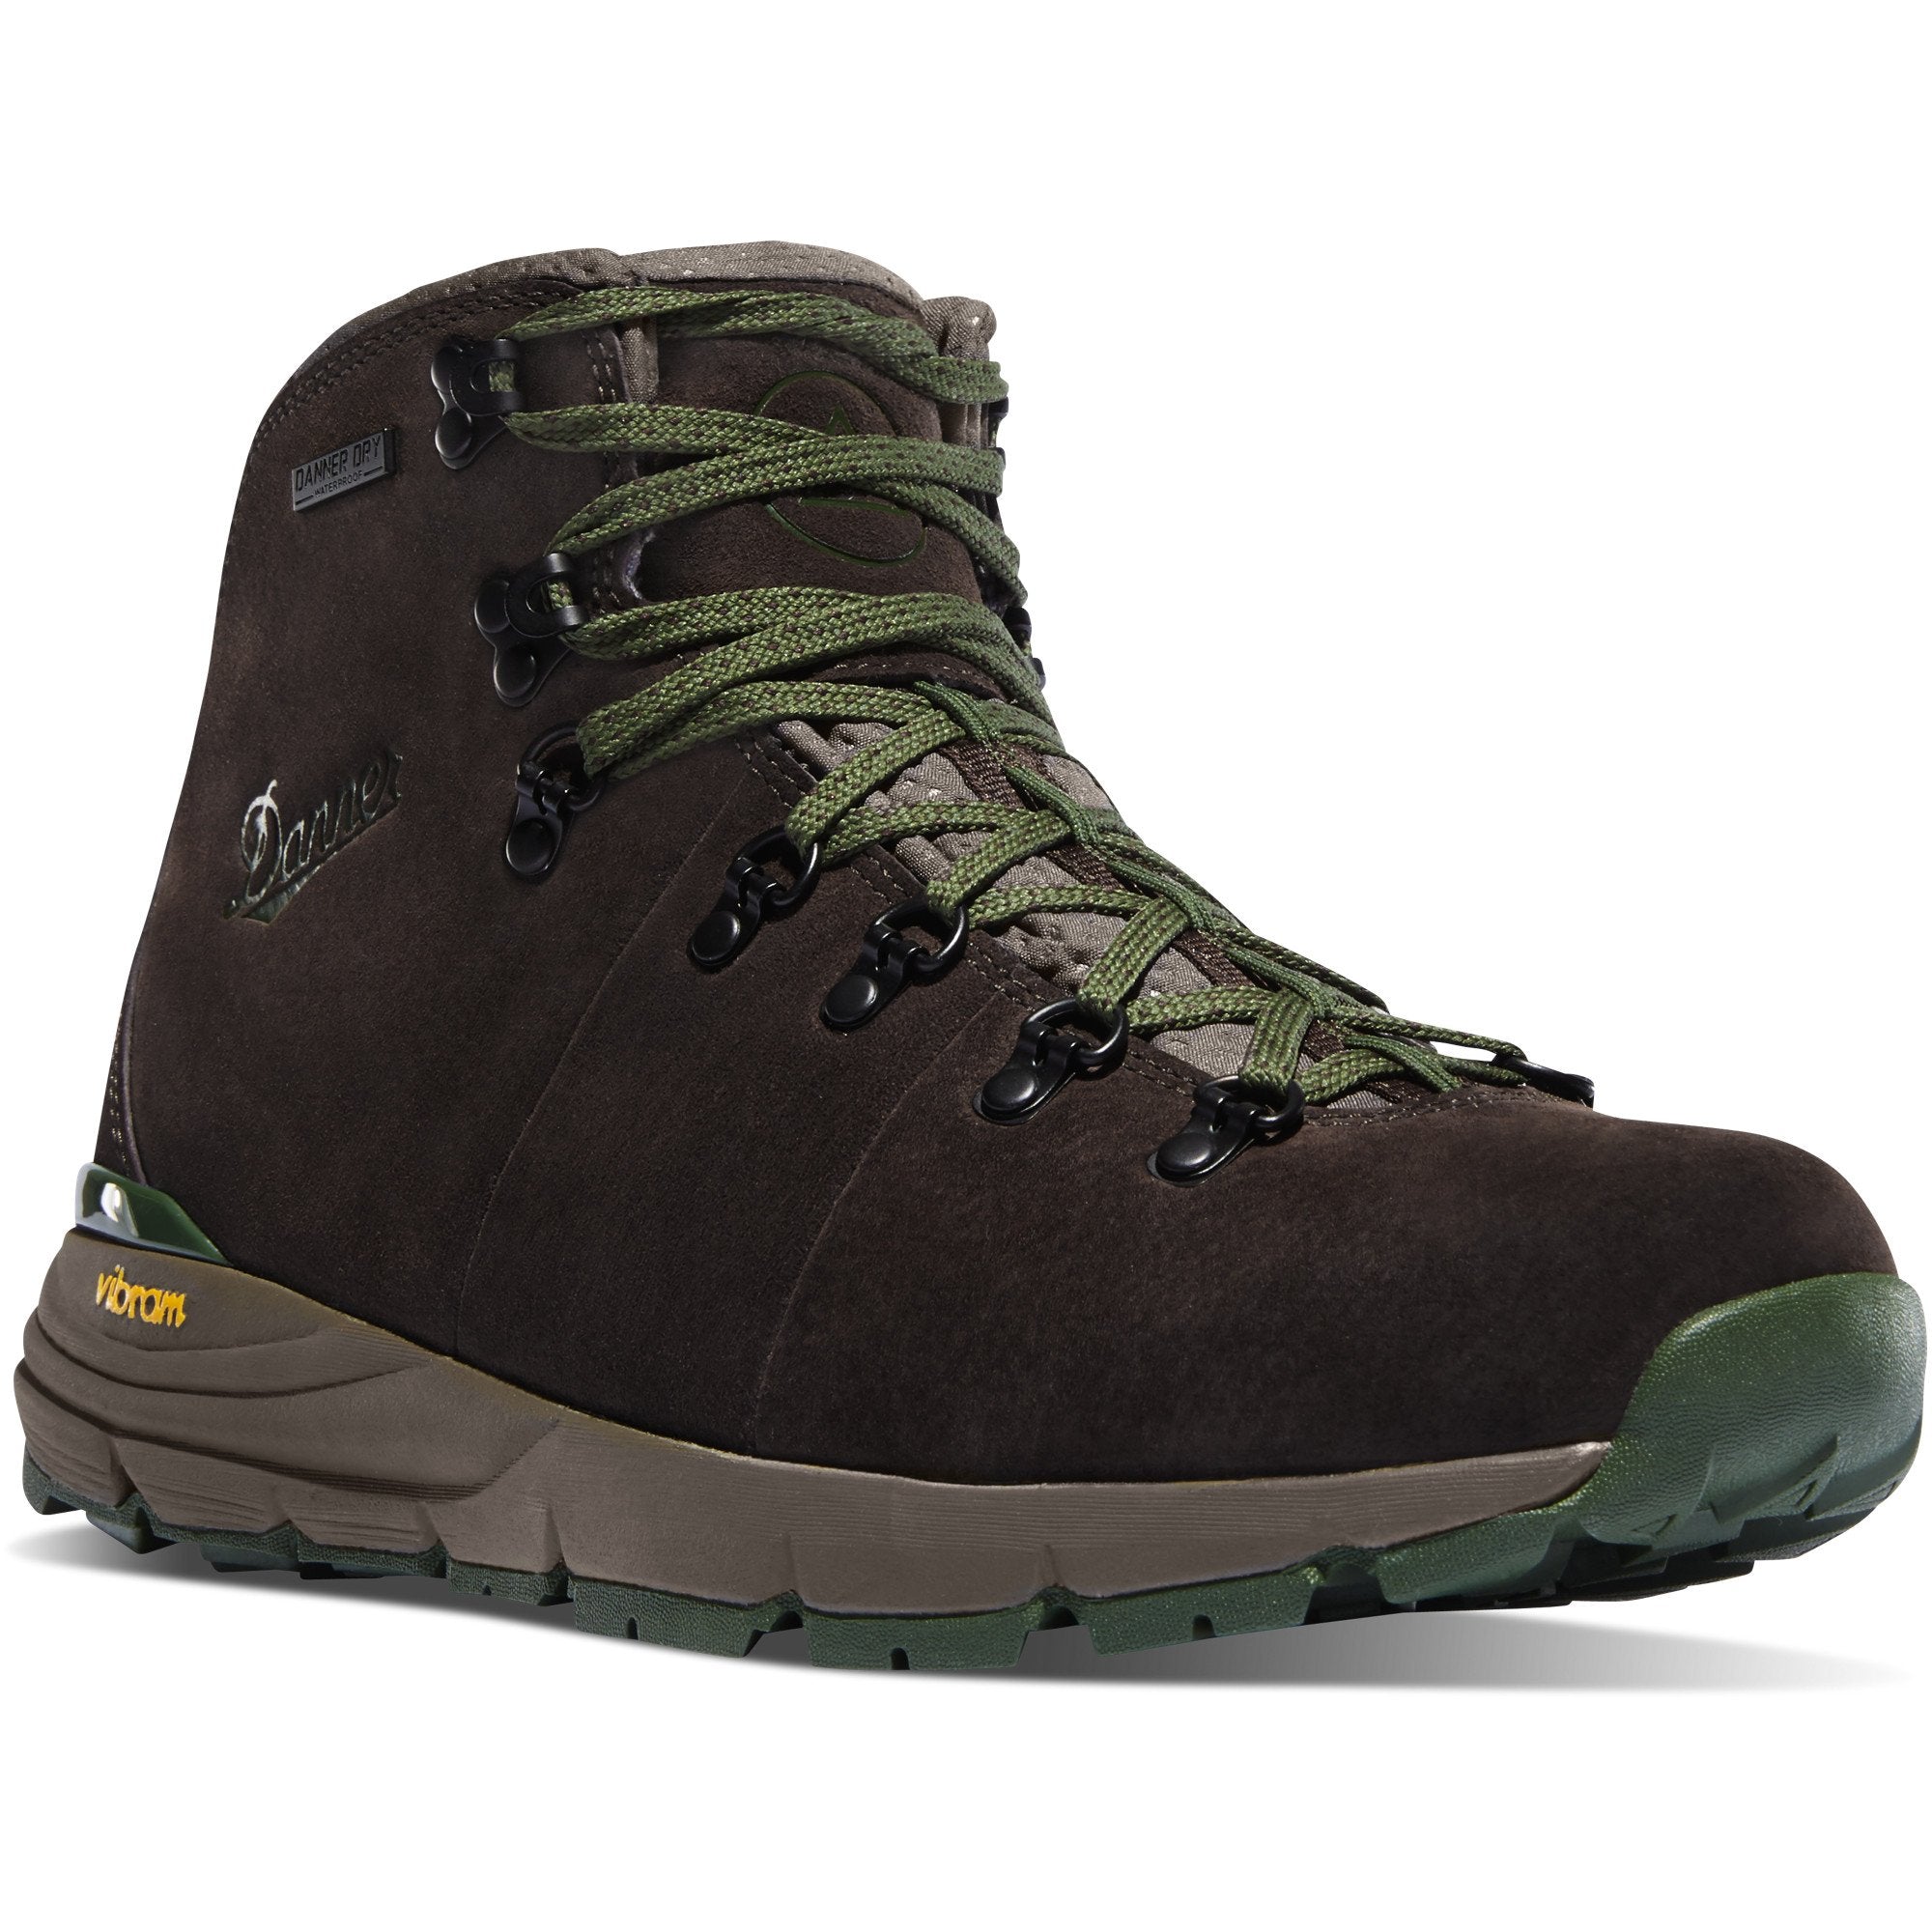 Danner Men's Mountain 600 4.5" Waterproof Hiking Boot in Dark Brown/Green from the side